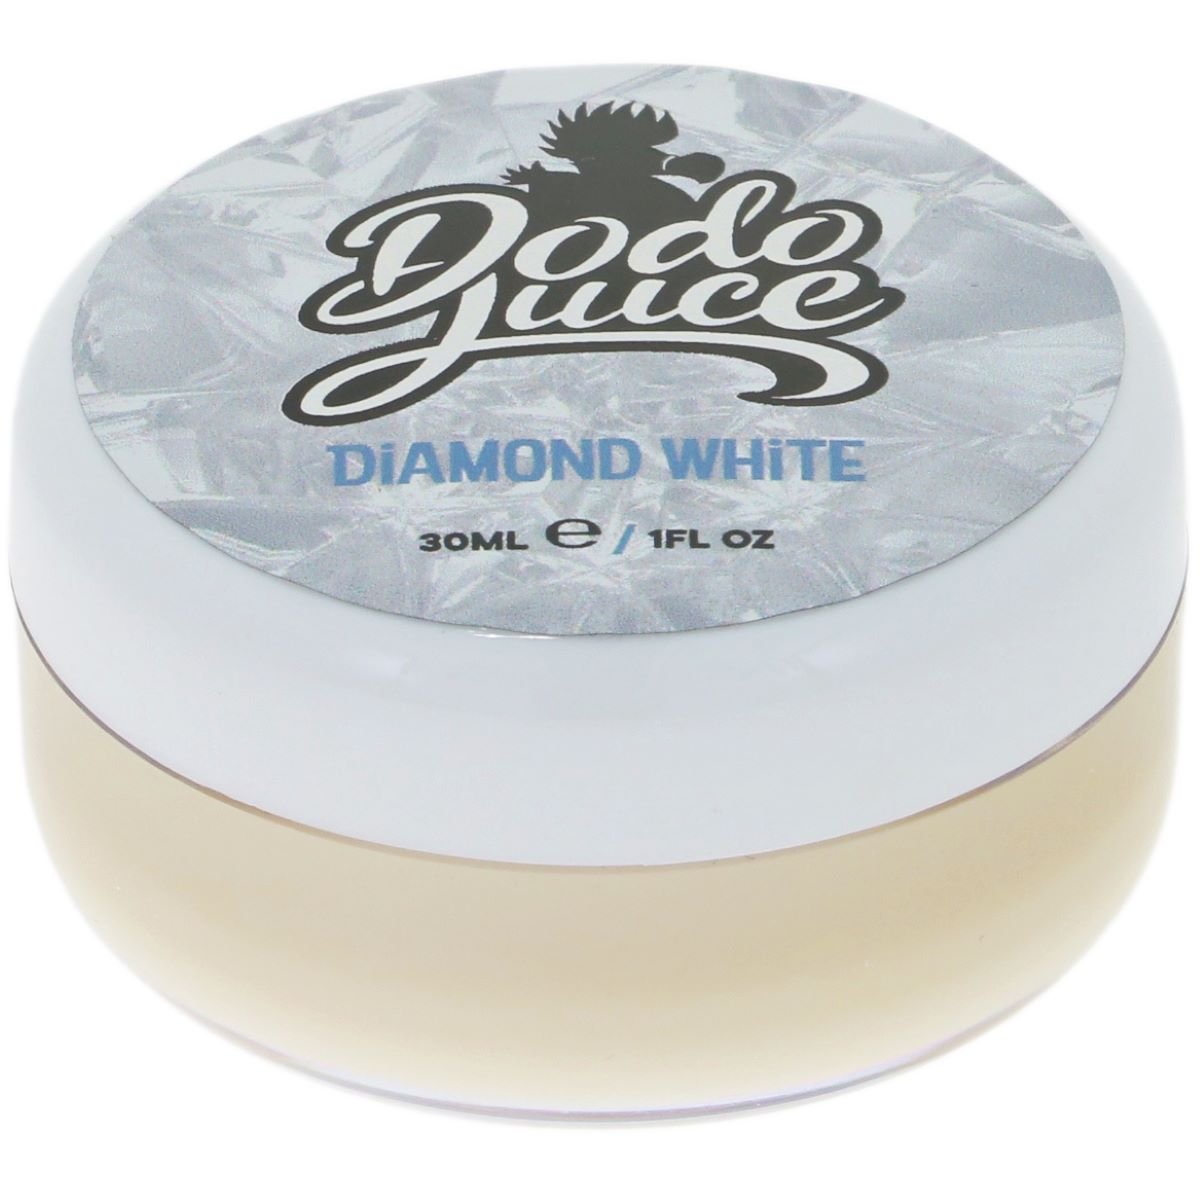 Diamond White hard wax for light coloured cars - 30ml